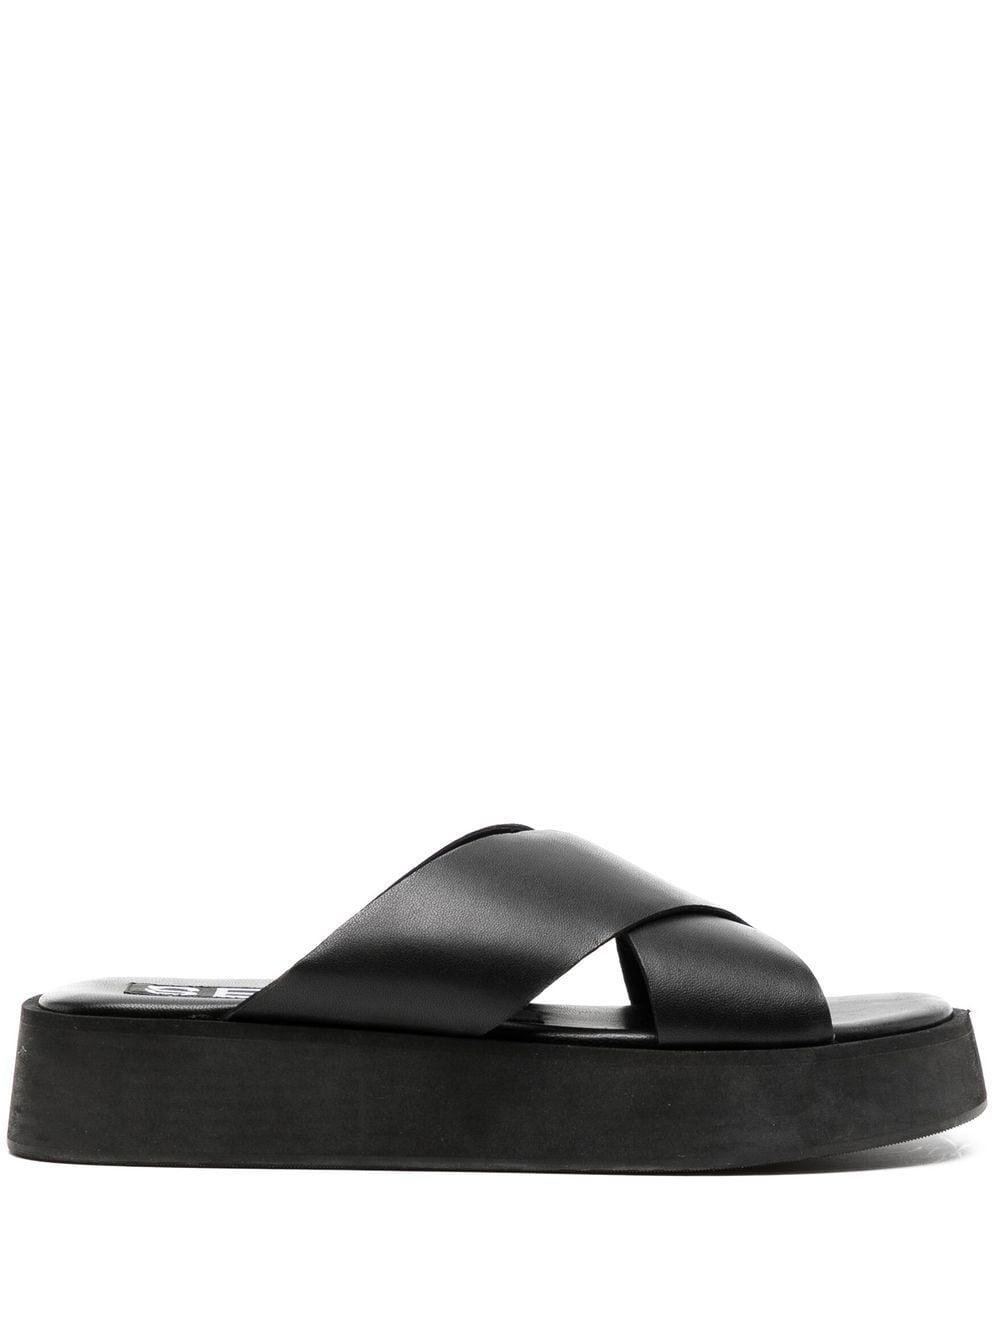 Senso Pippi I Crossover Platform Sandals in Black | Lyst